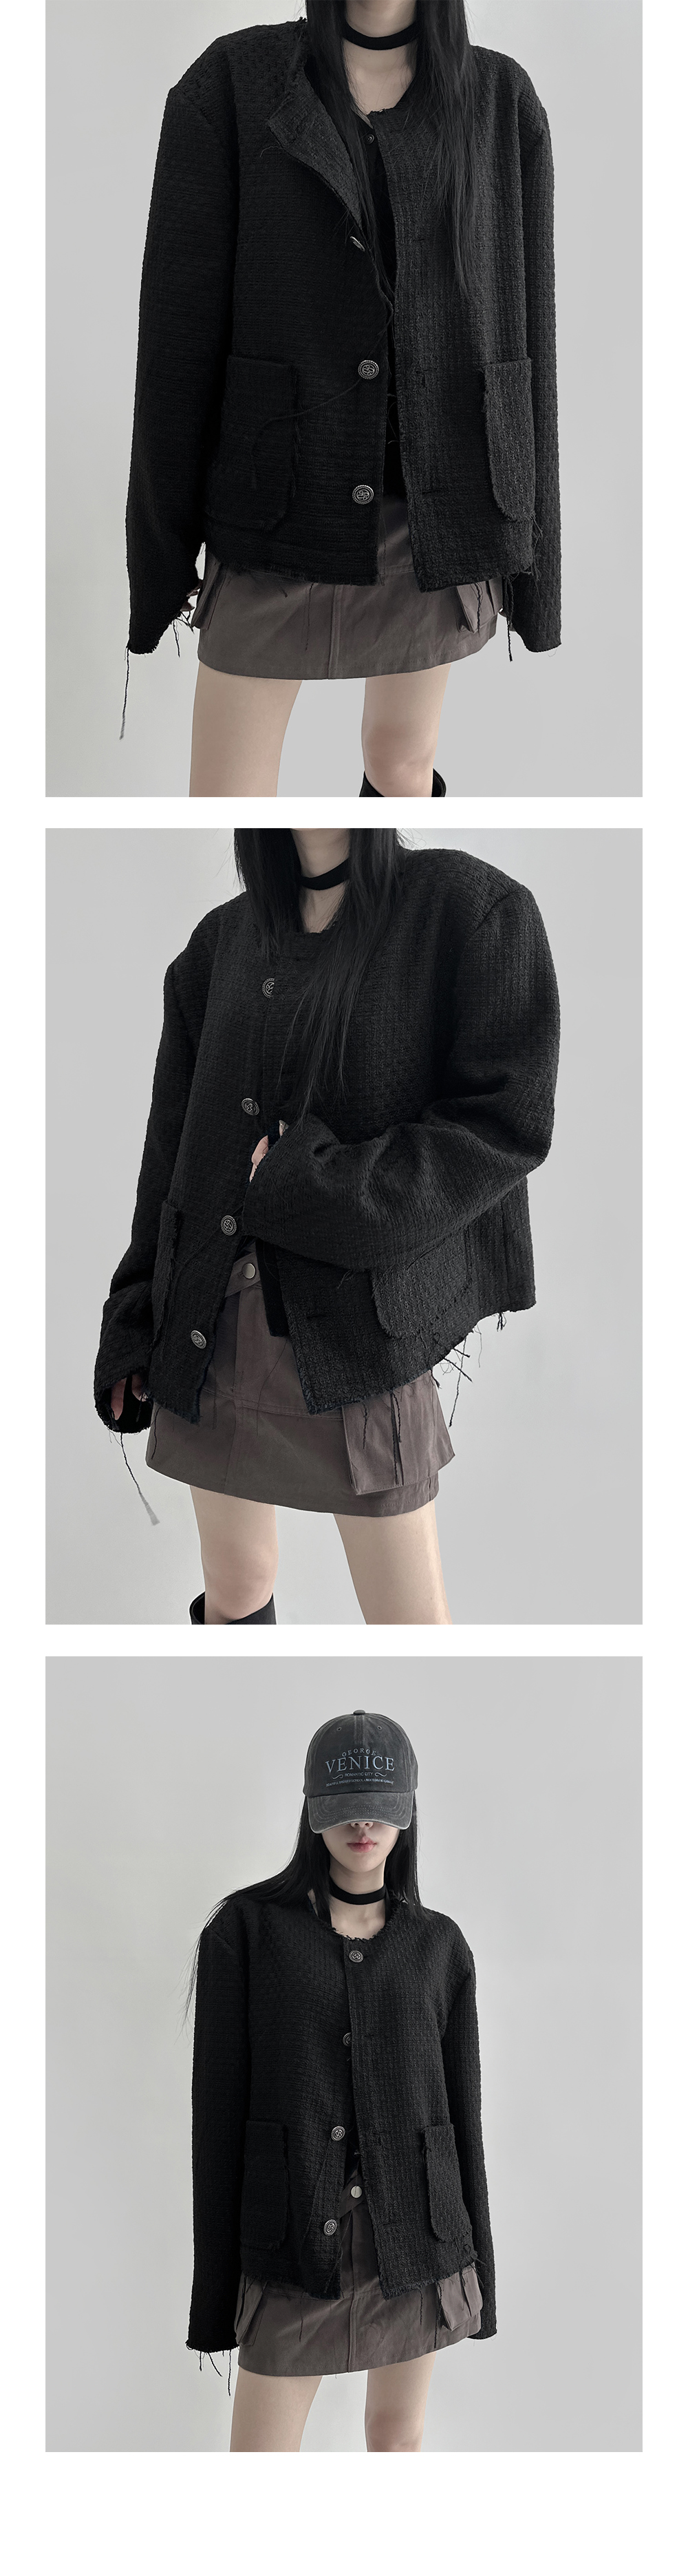 mini skirt charcoal color image-S1L13